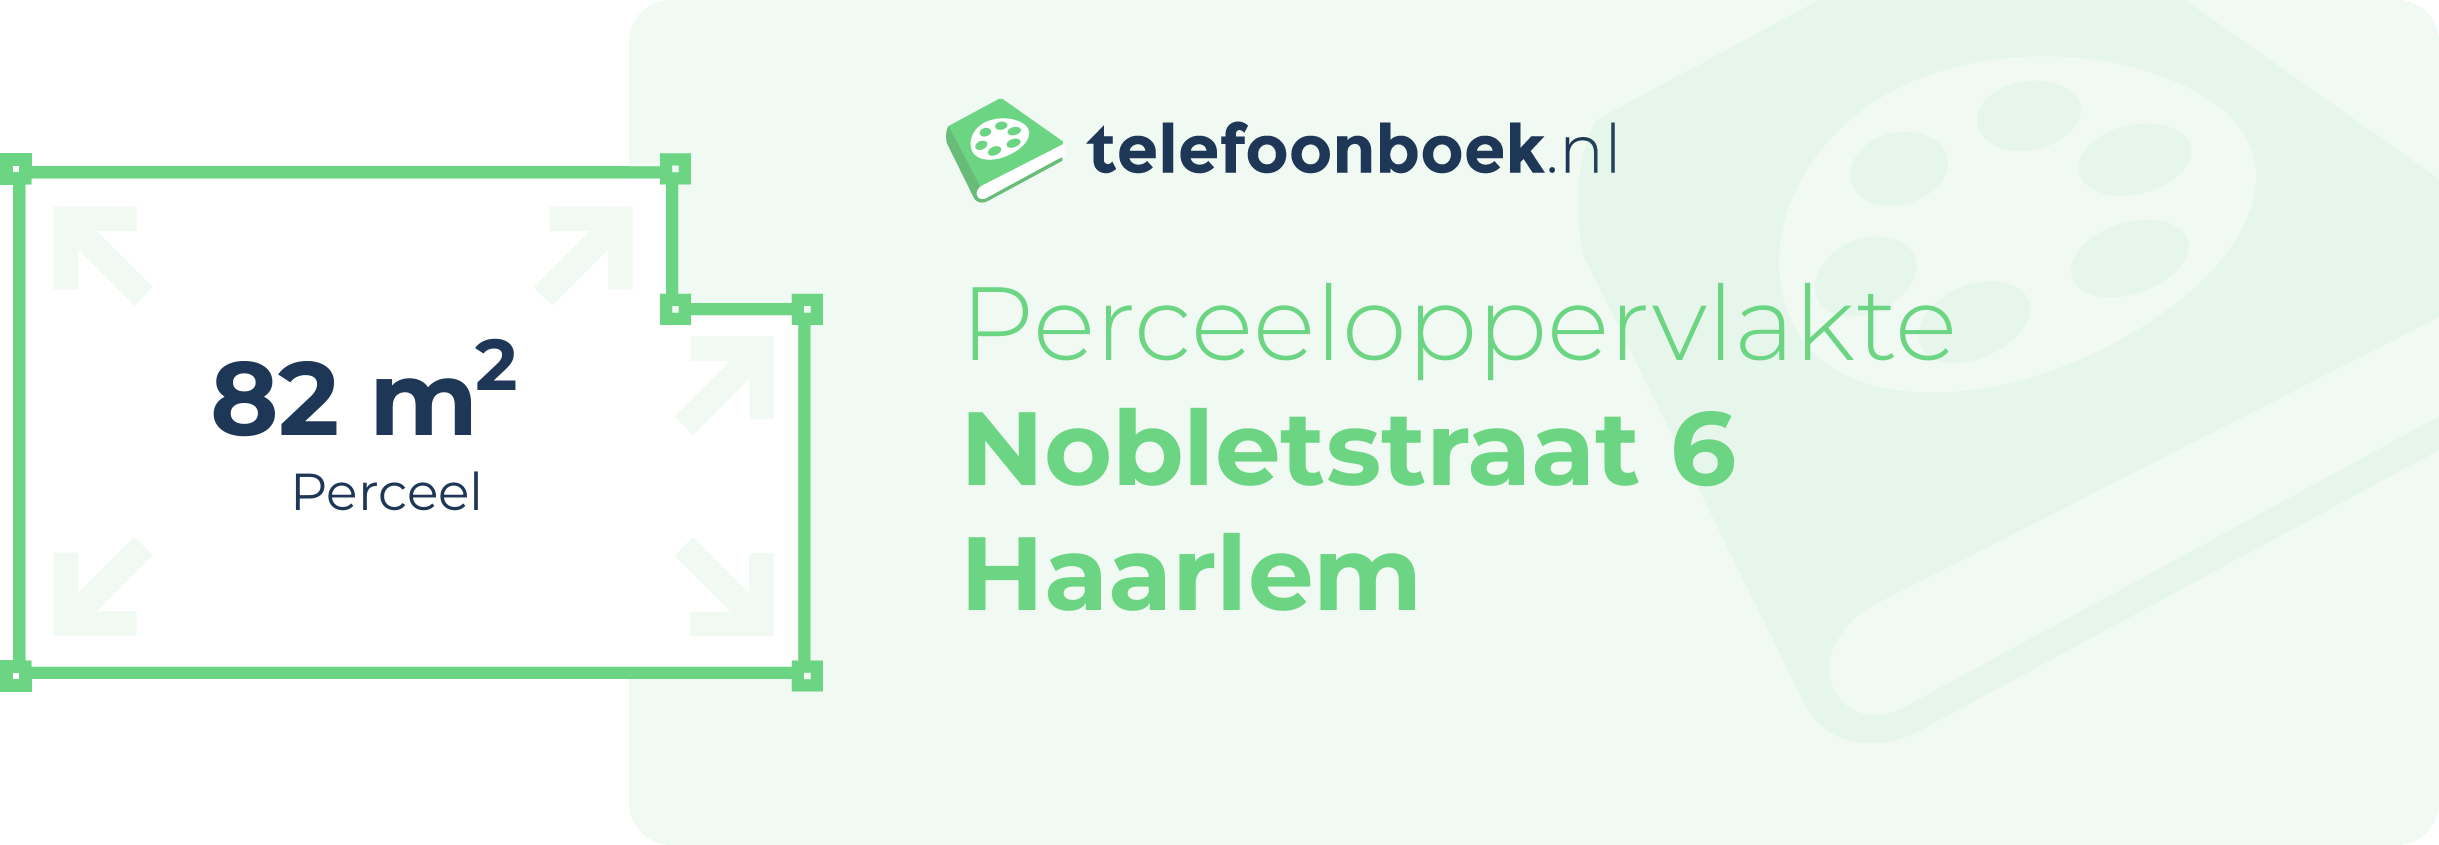 Perceeloppervlakte Nobletstraat 6 Haarlem